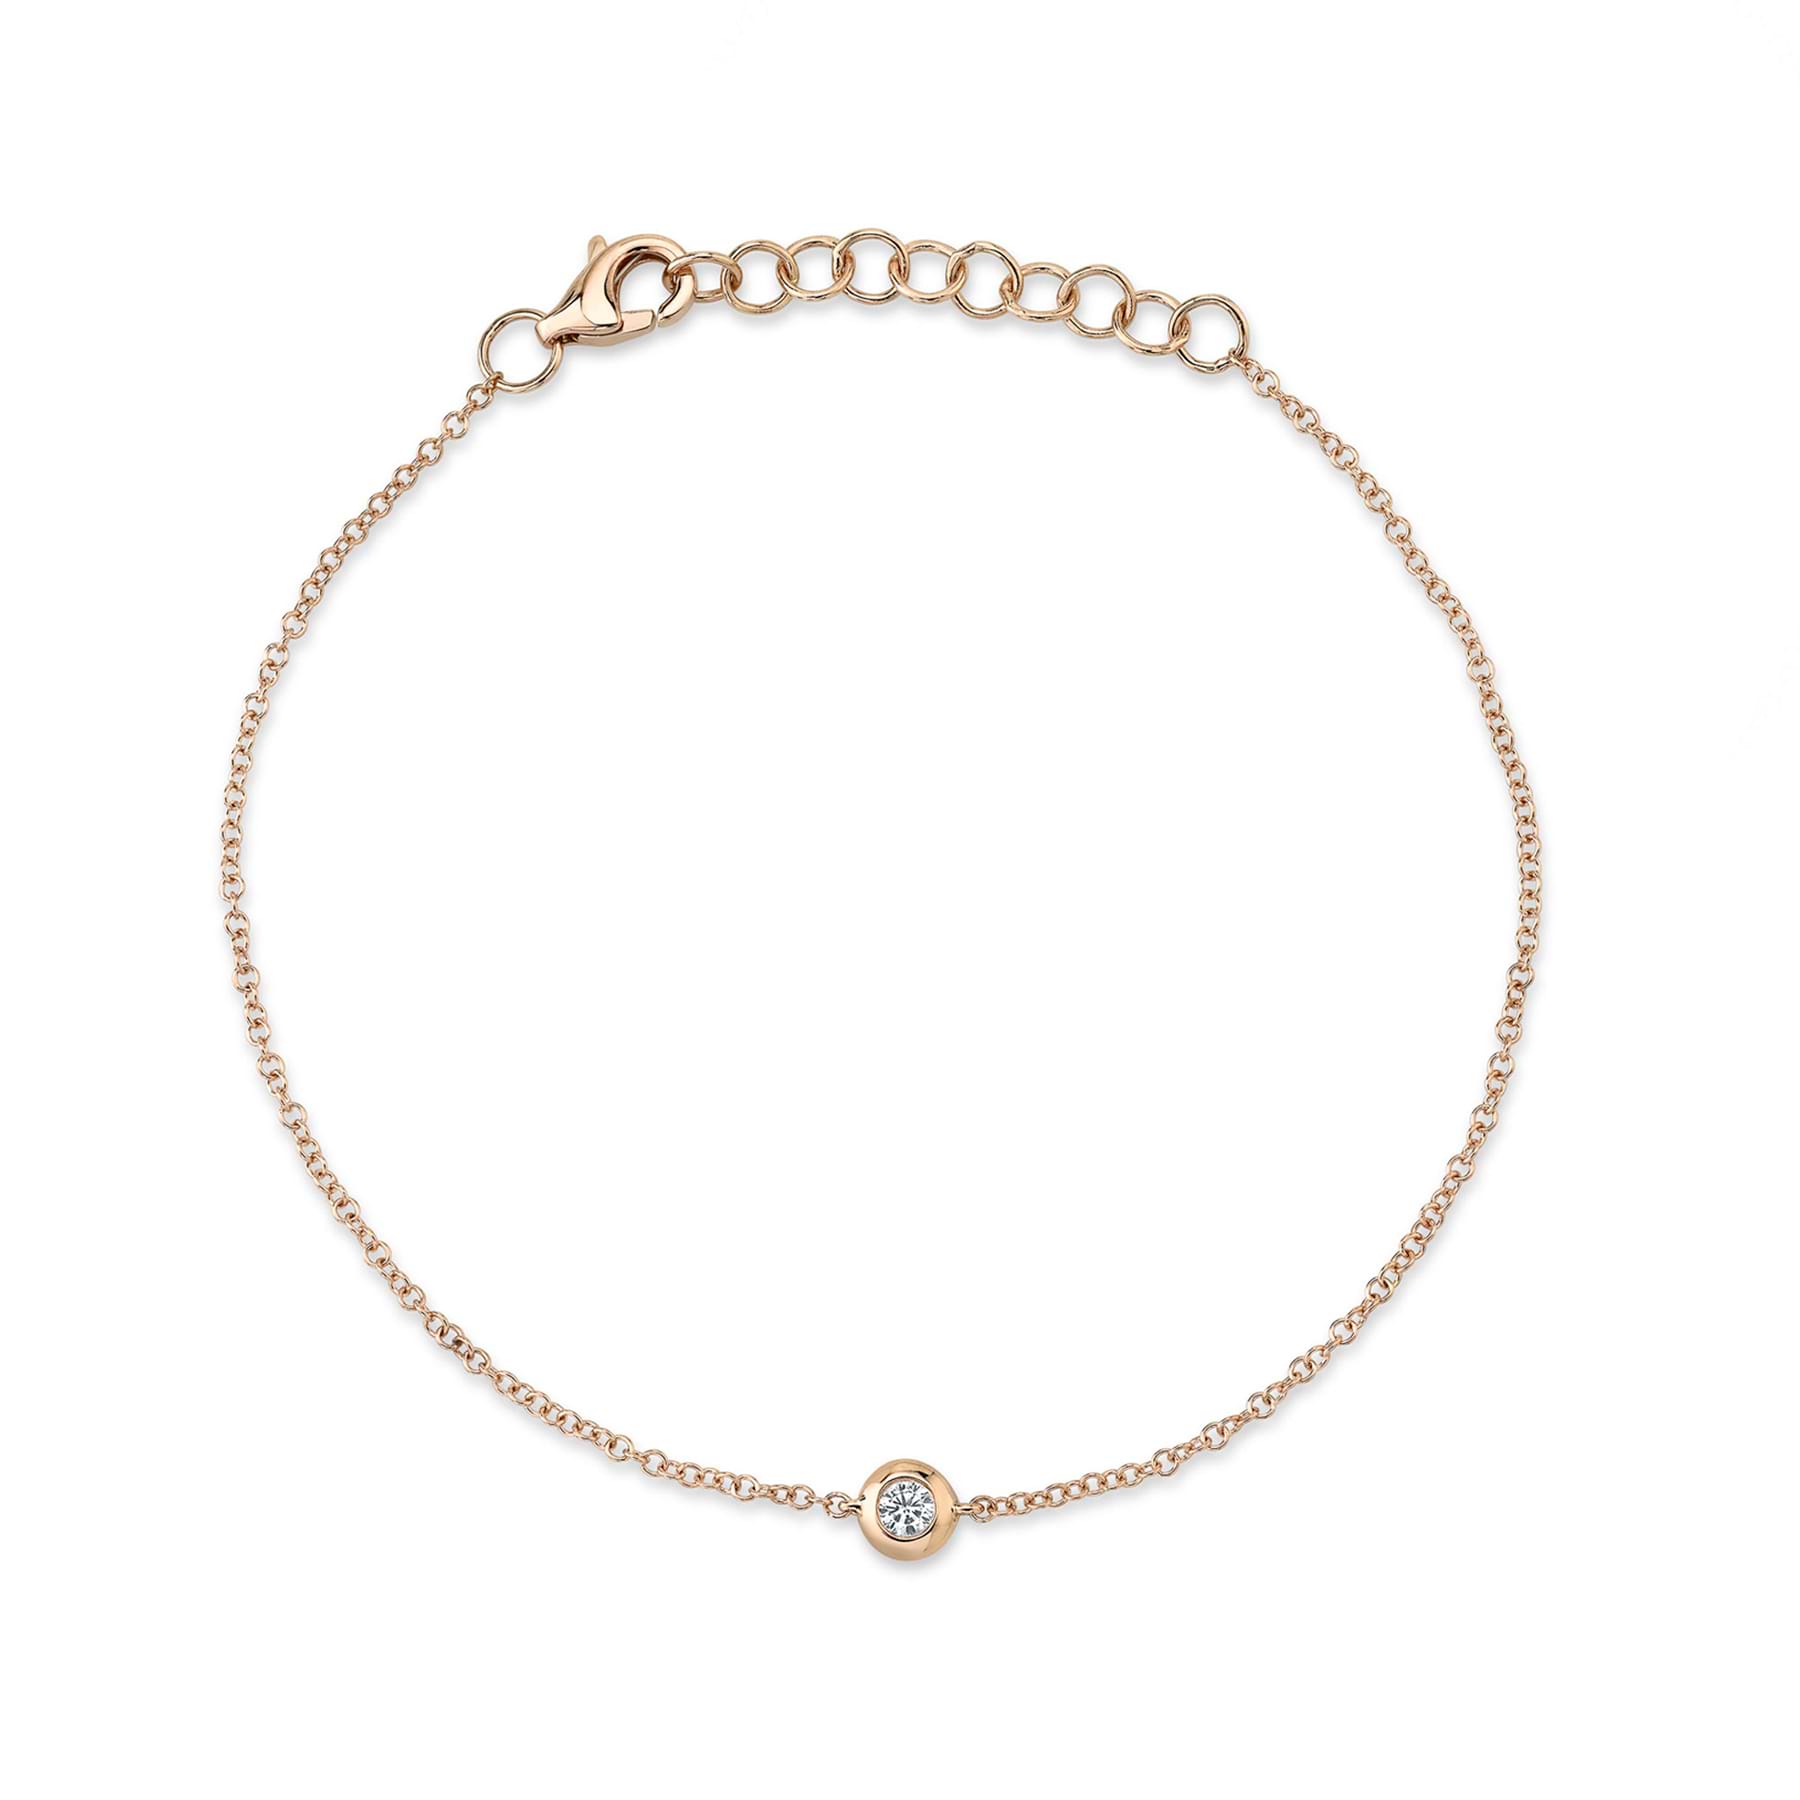 Diamond Bezel Solitare Link Bracelet 14k Rose Gold (0.06ct)